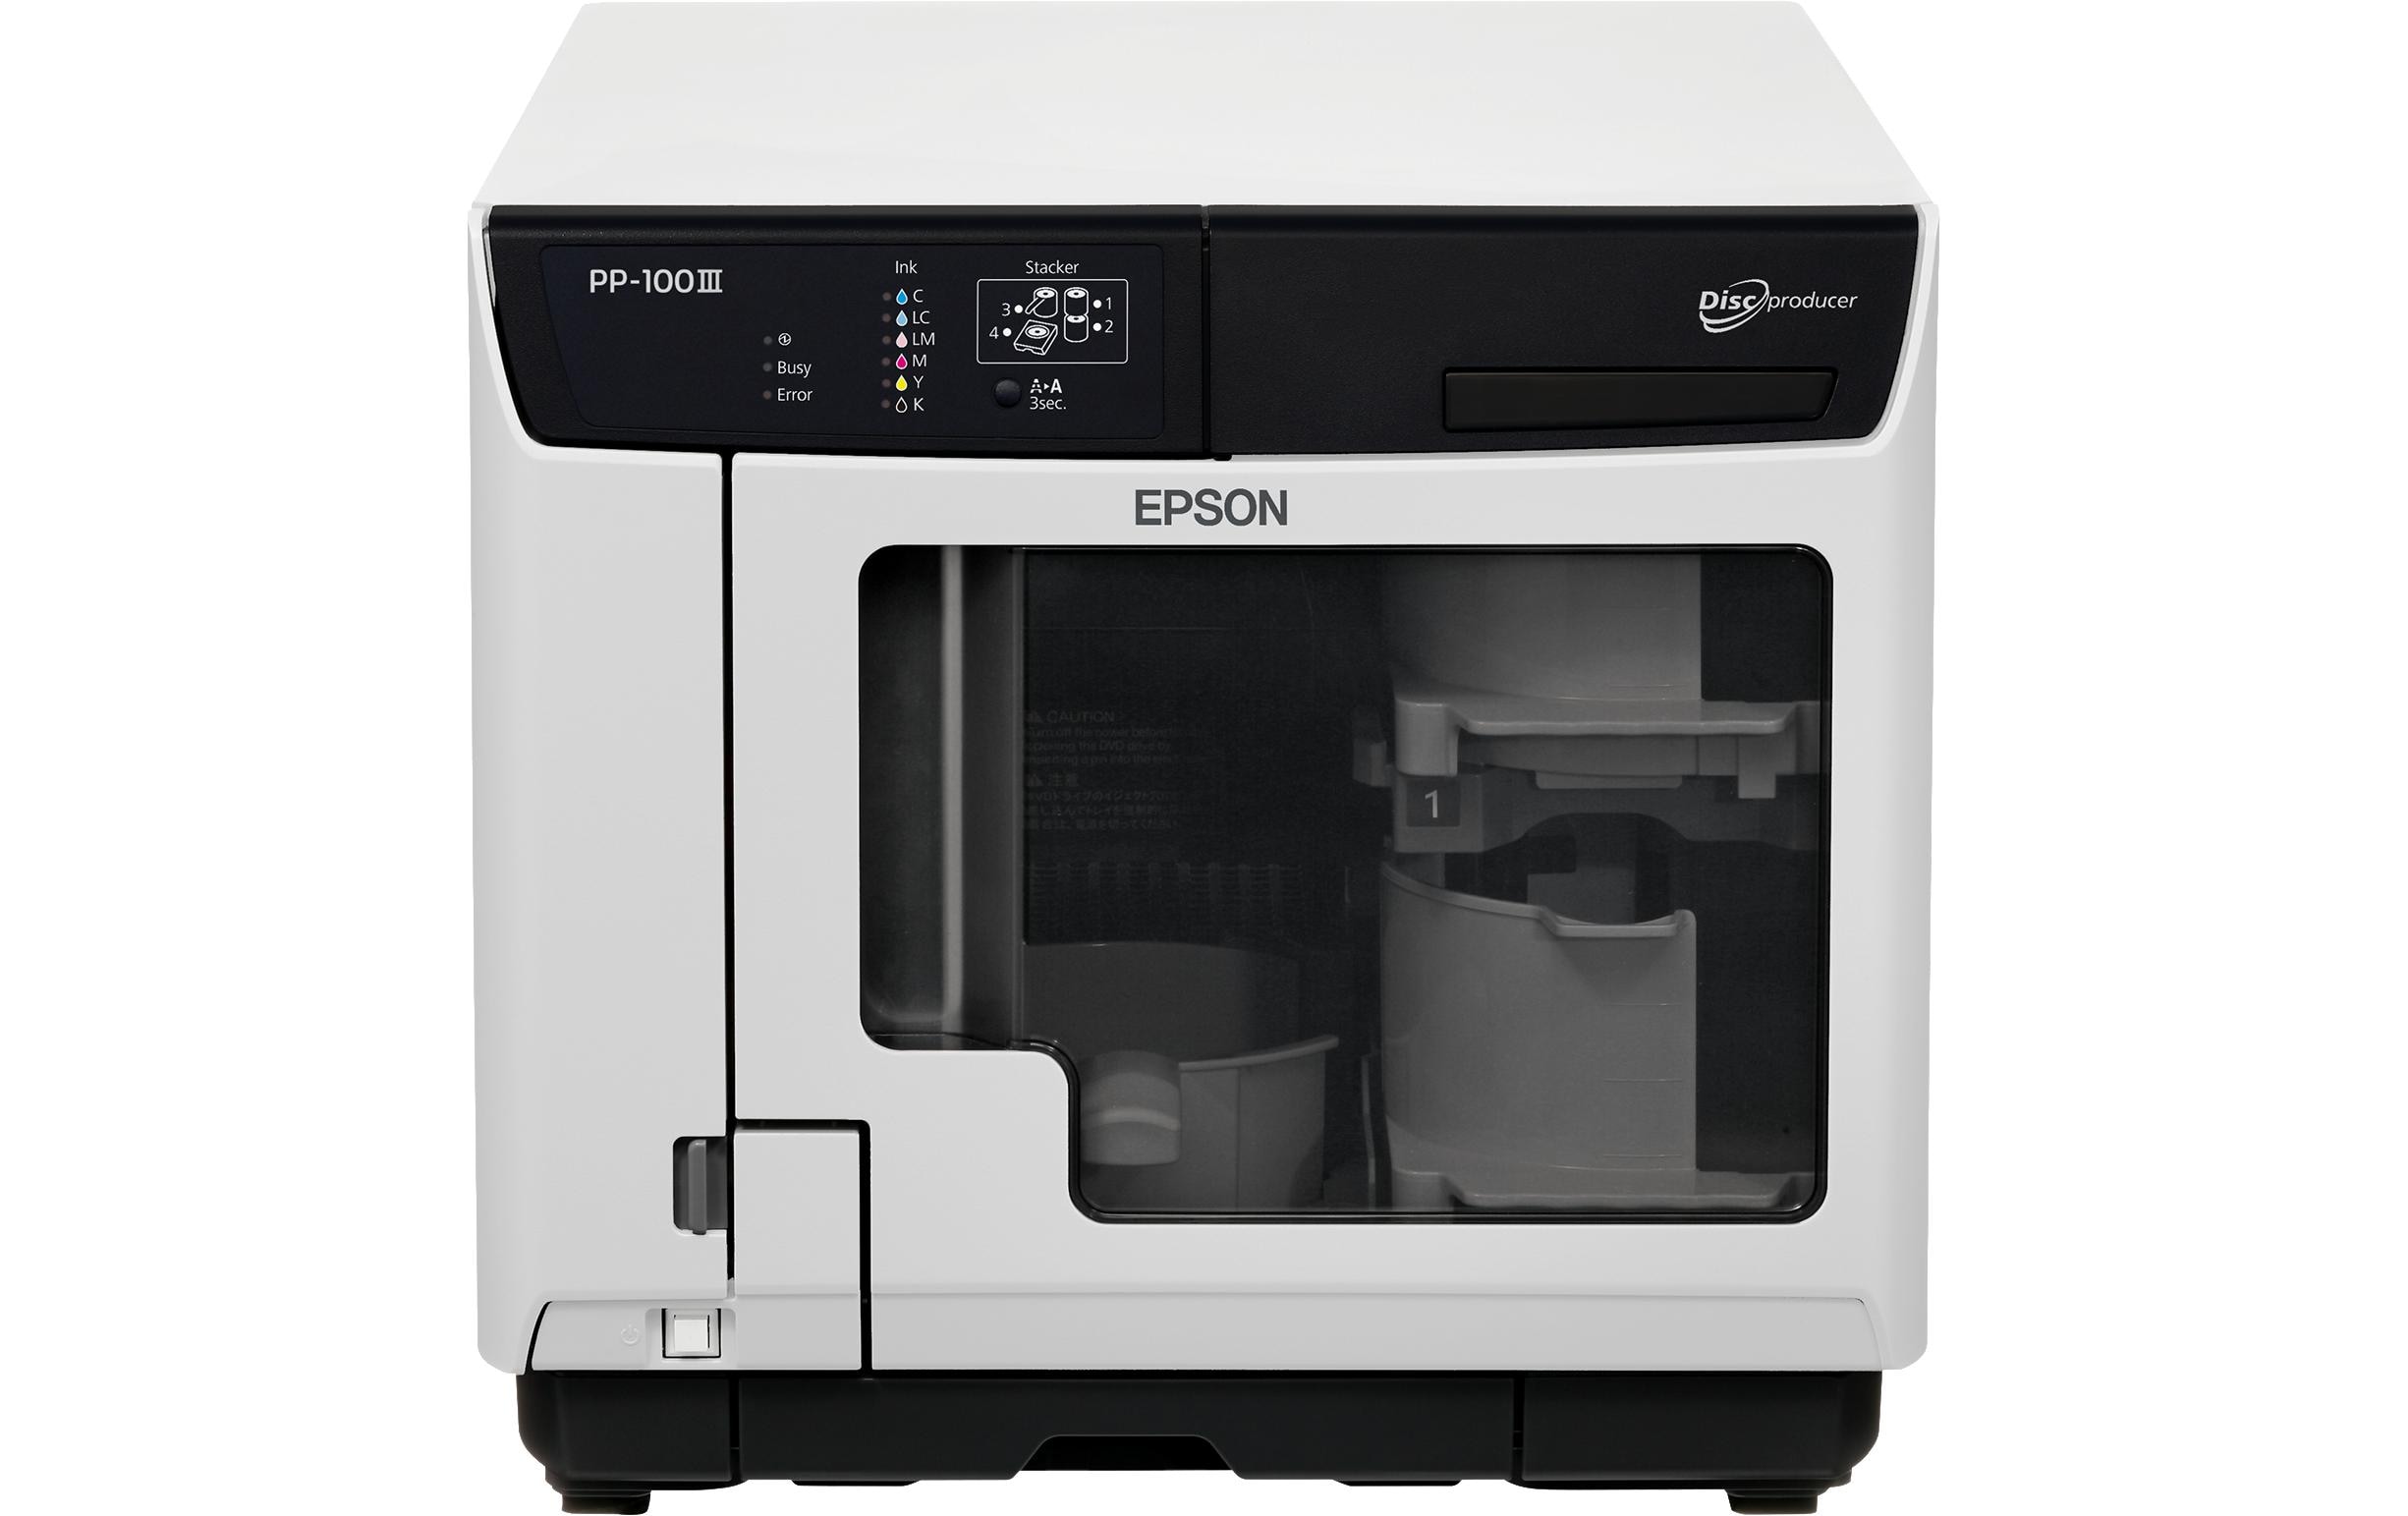 Epson Autoprinter DiscProducer PP-100III